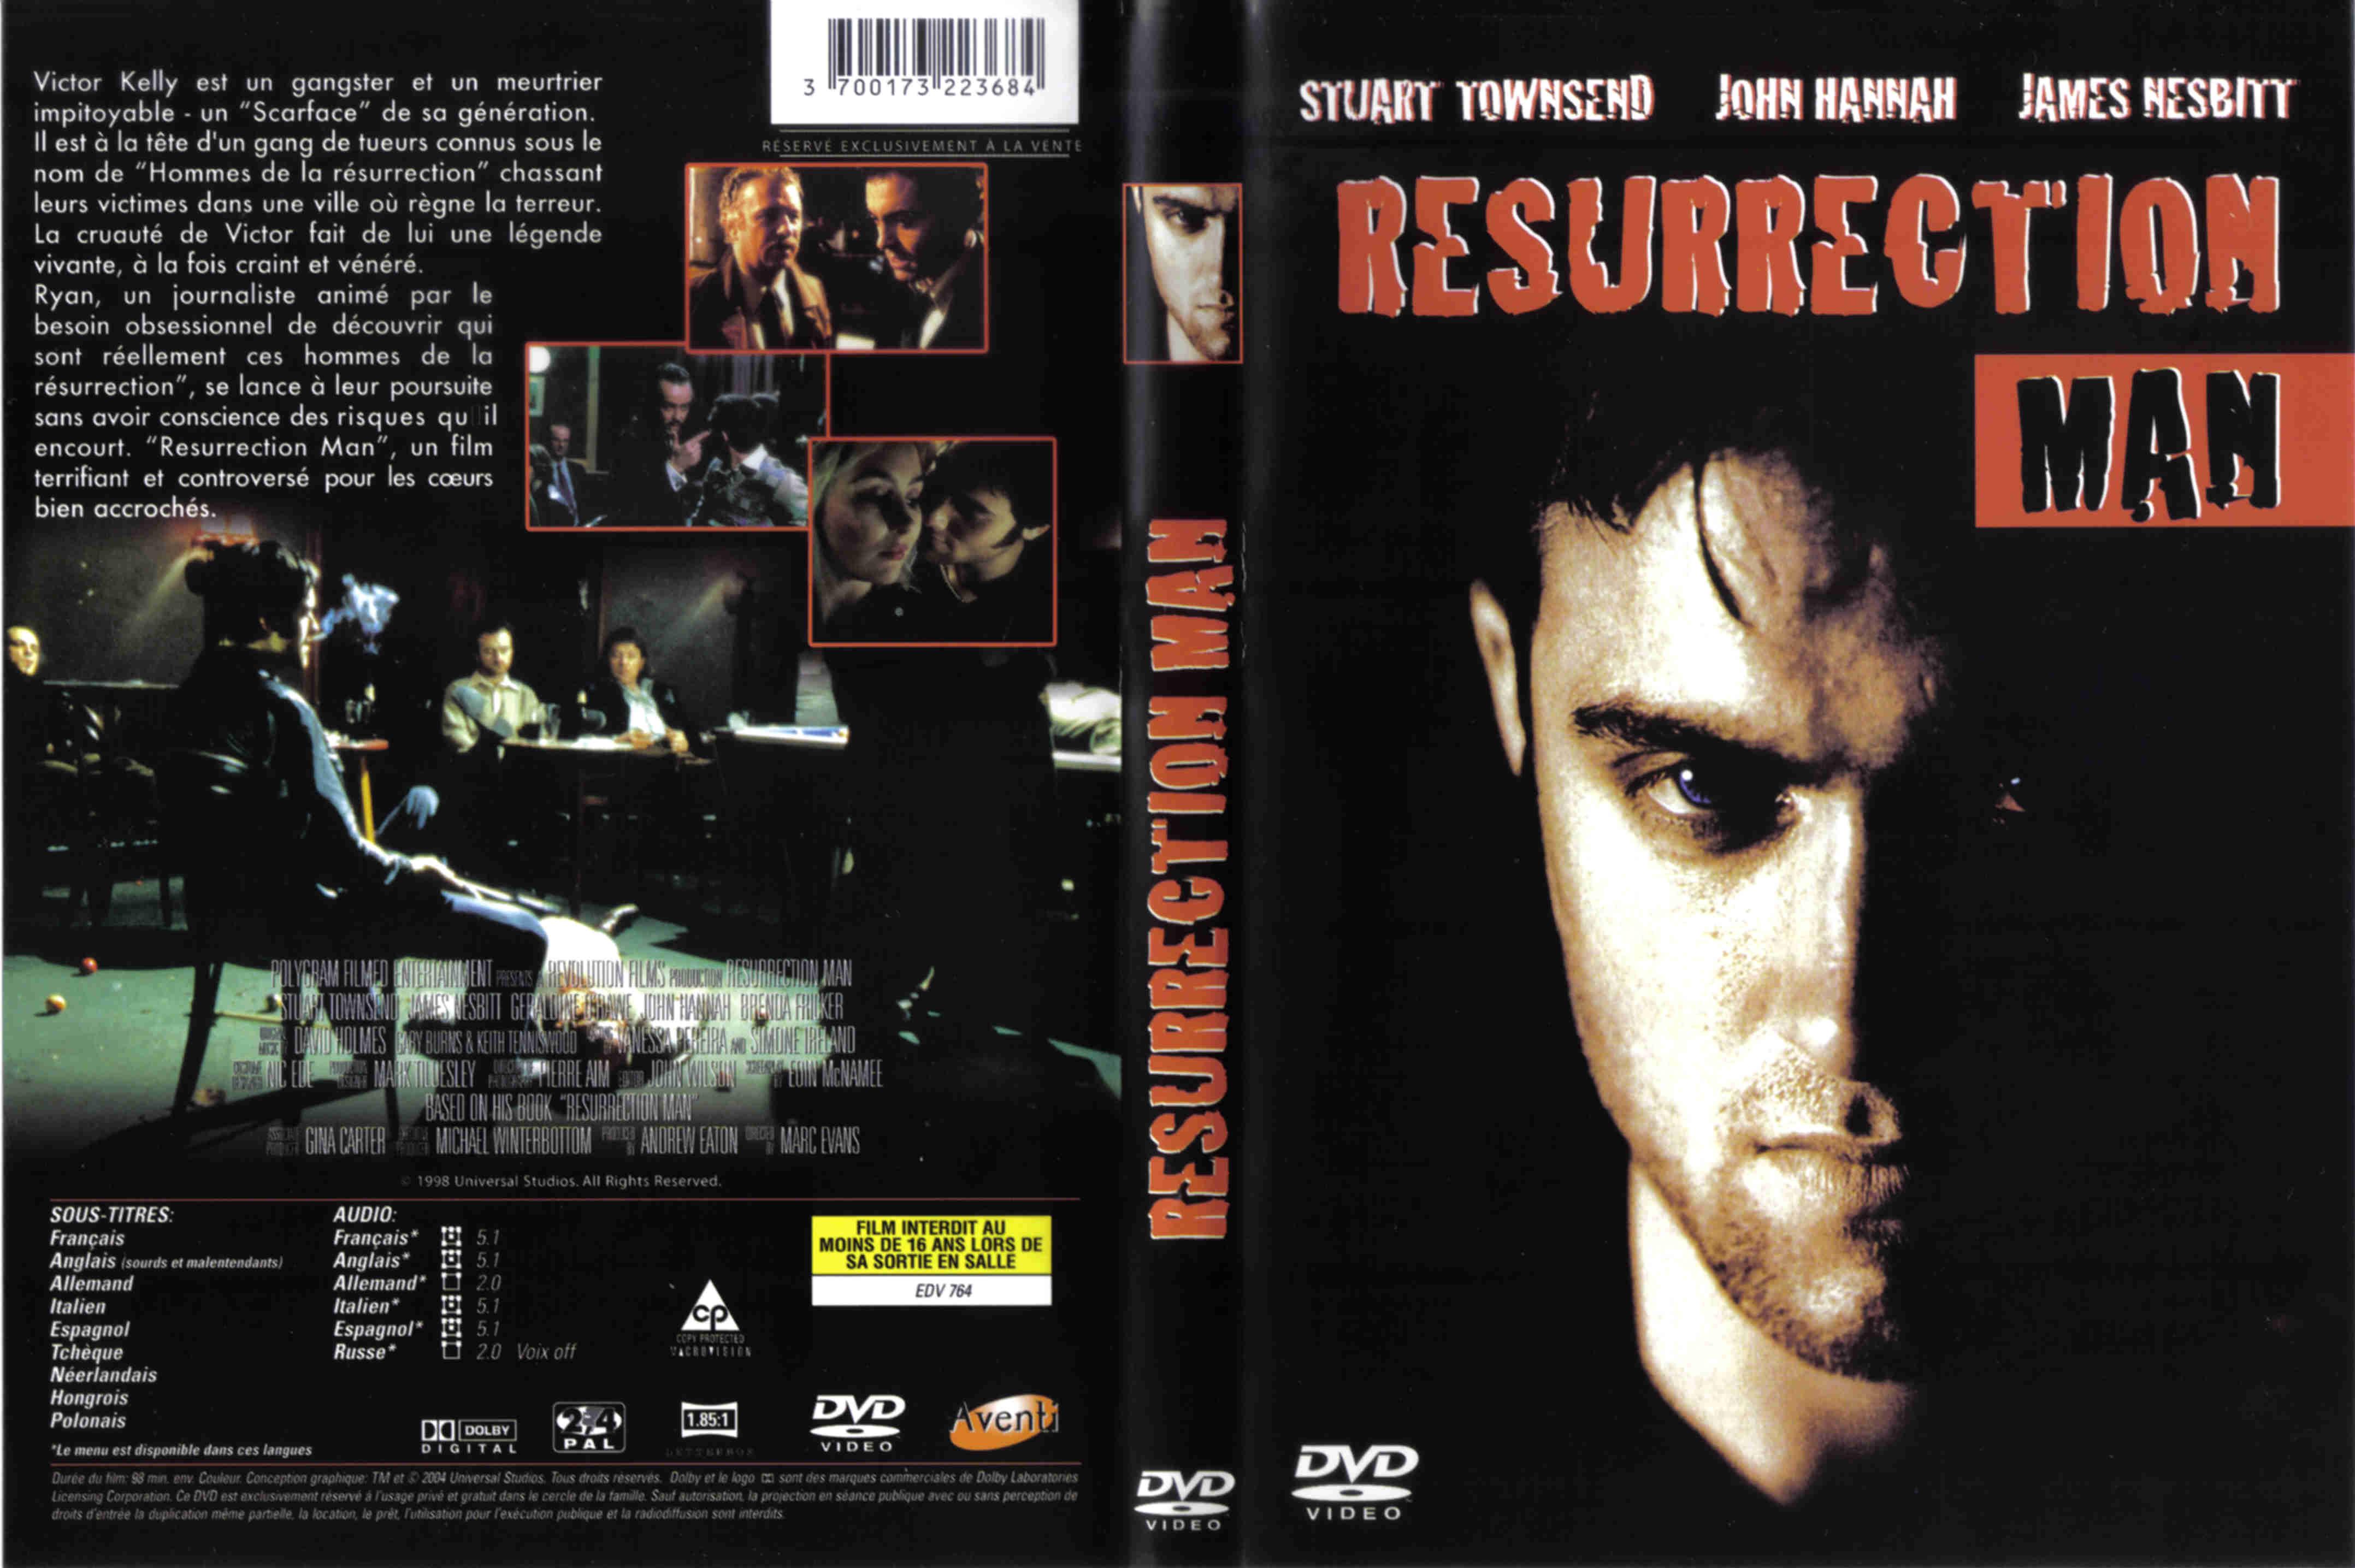 Jaquette DVD Resurrection man